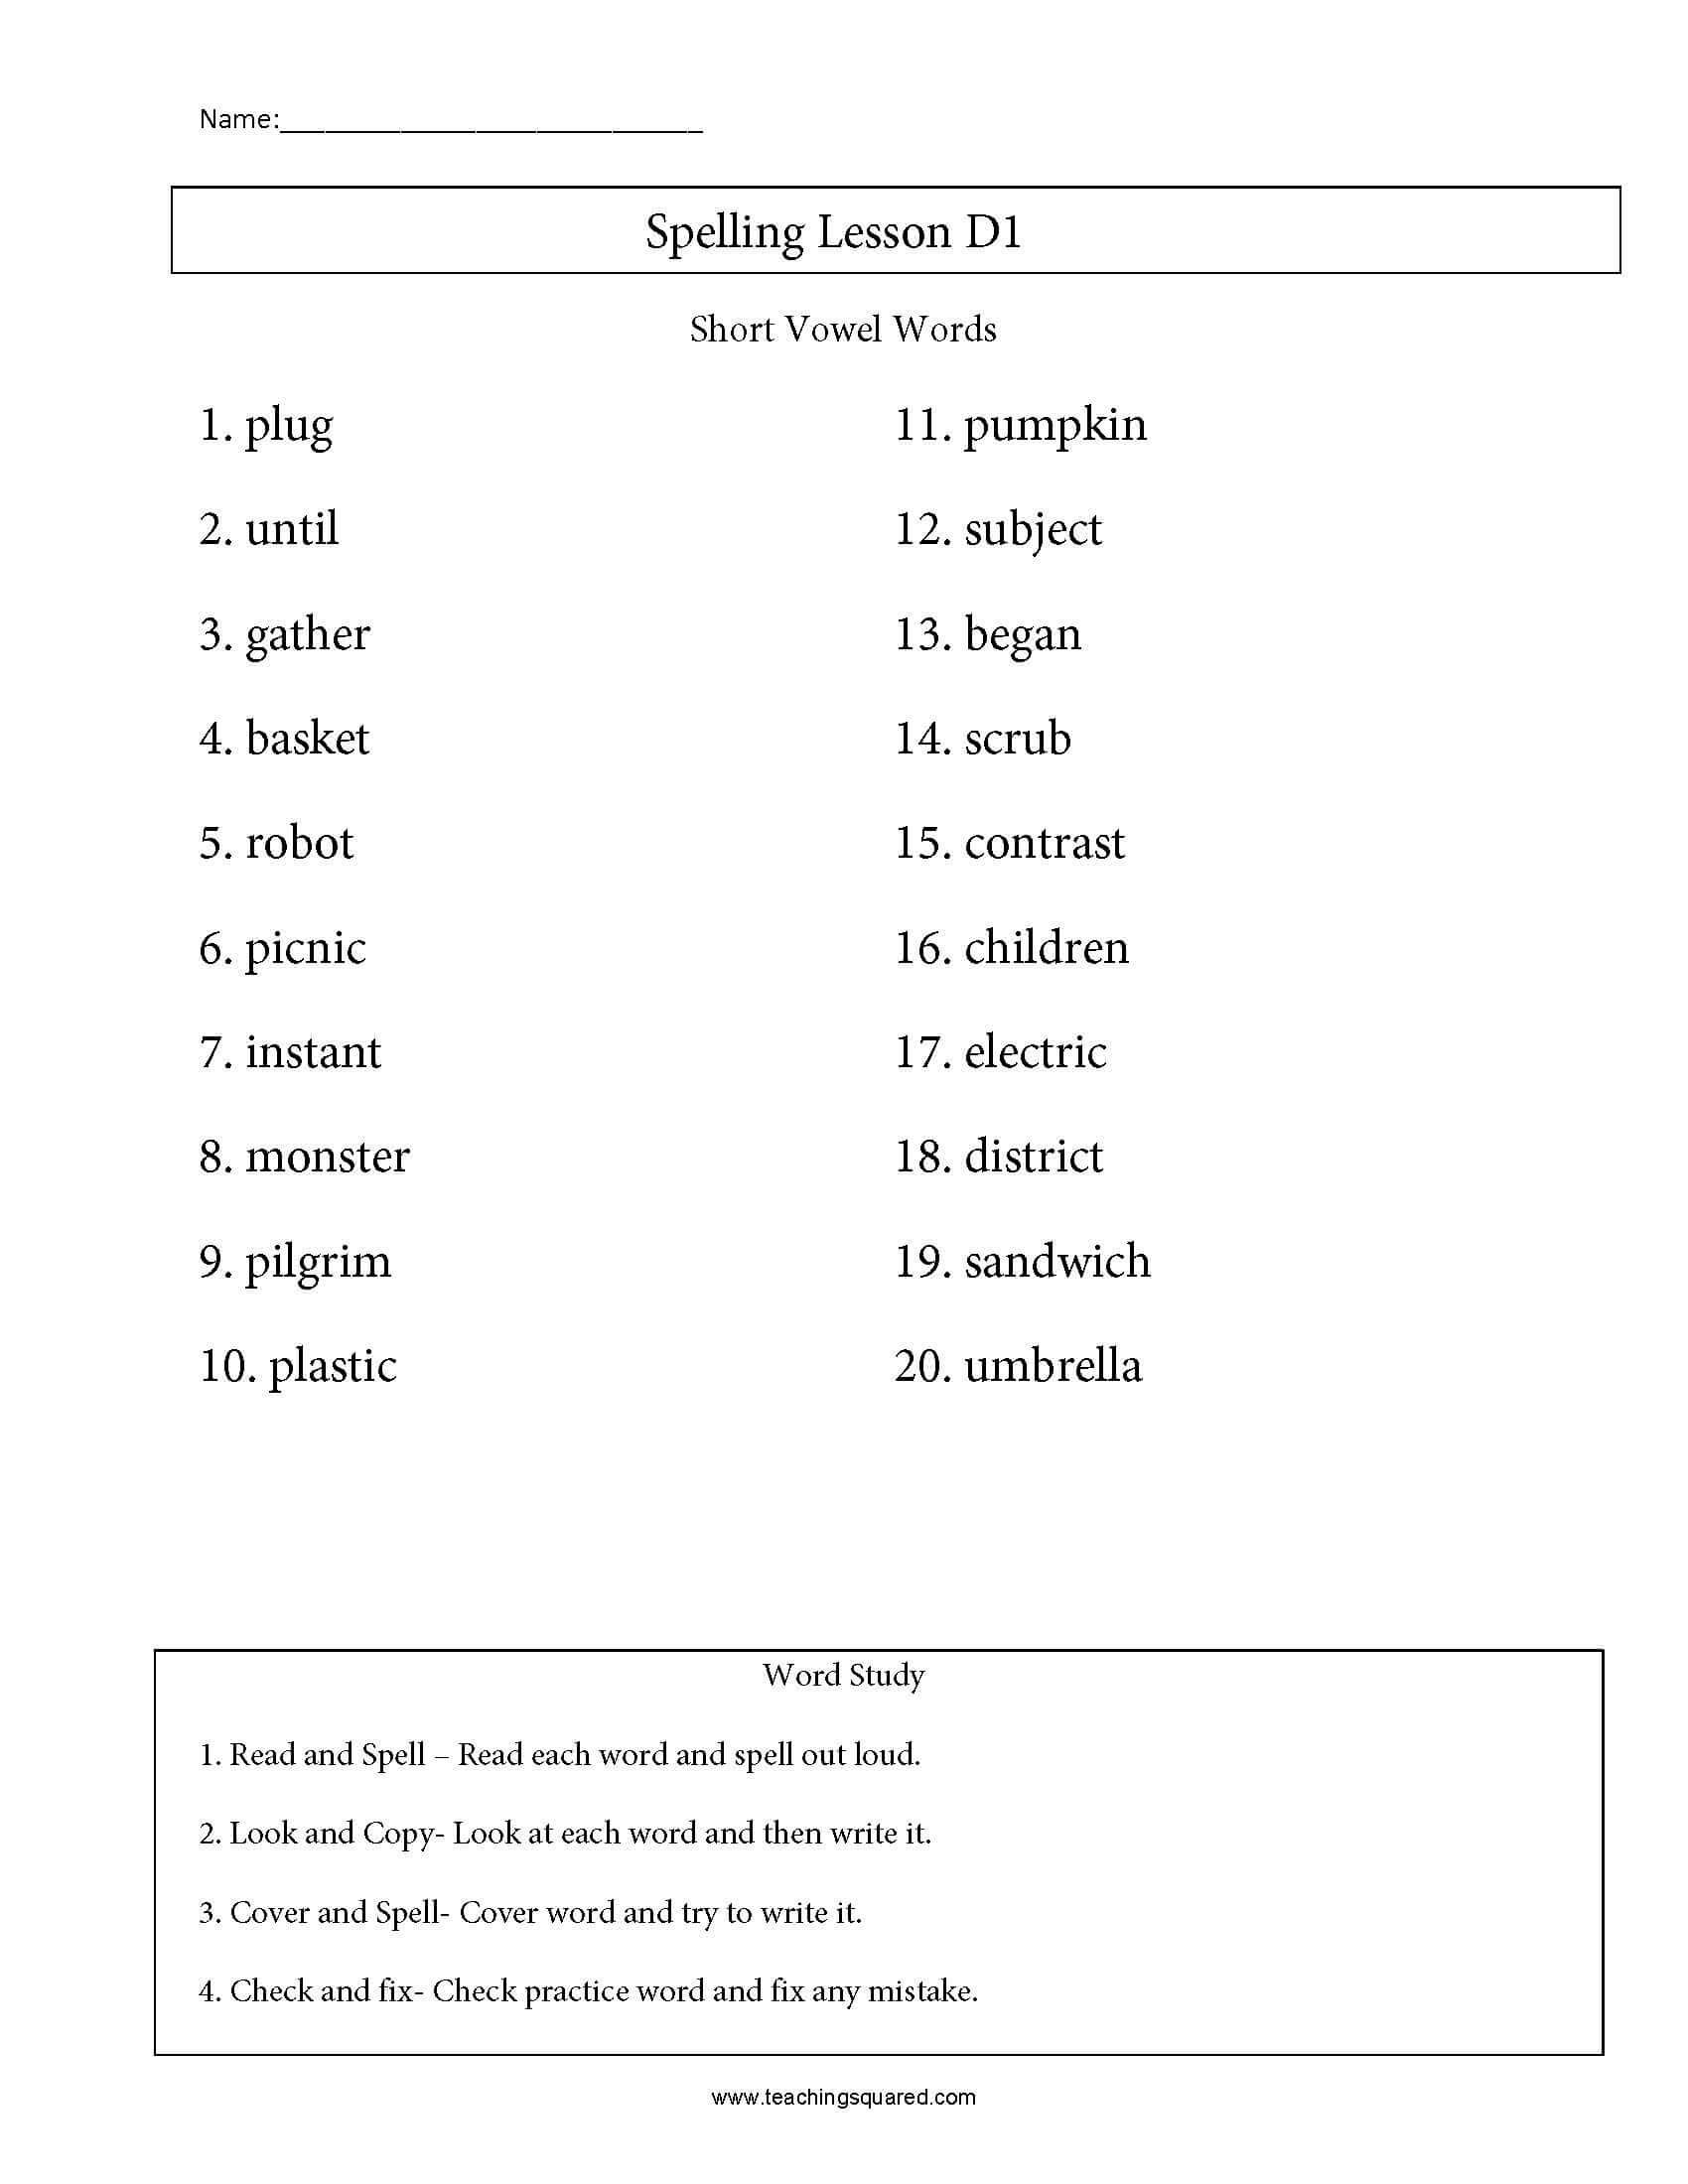 Spelling - Teaching Squared Pertaining To 6th Grade Spelling Worksheet